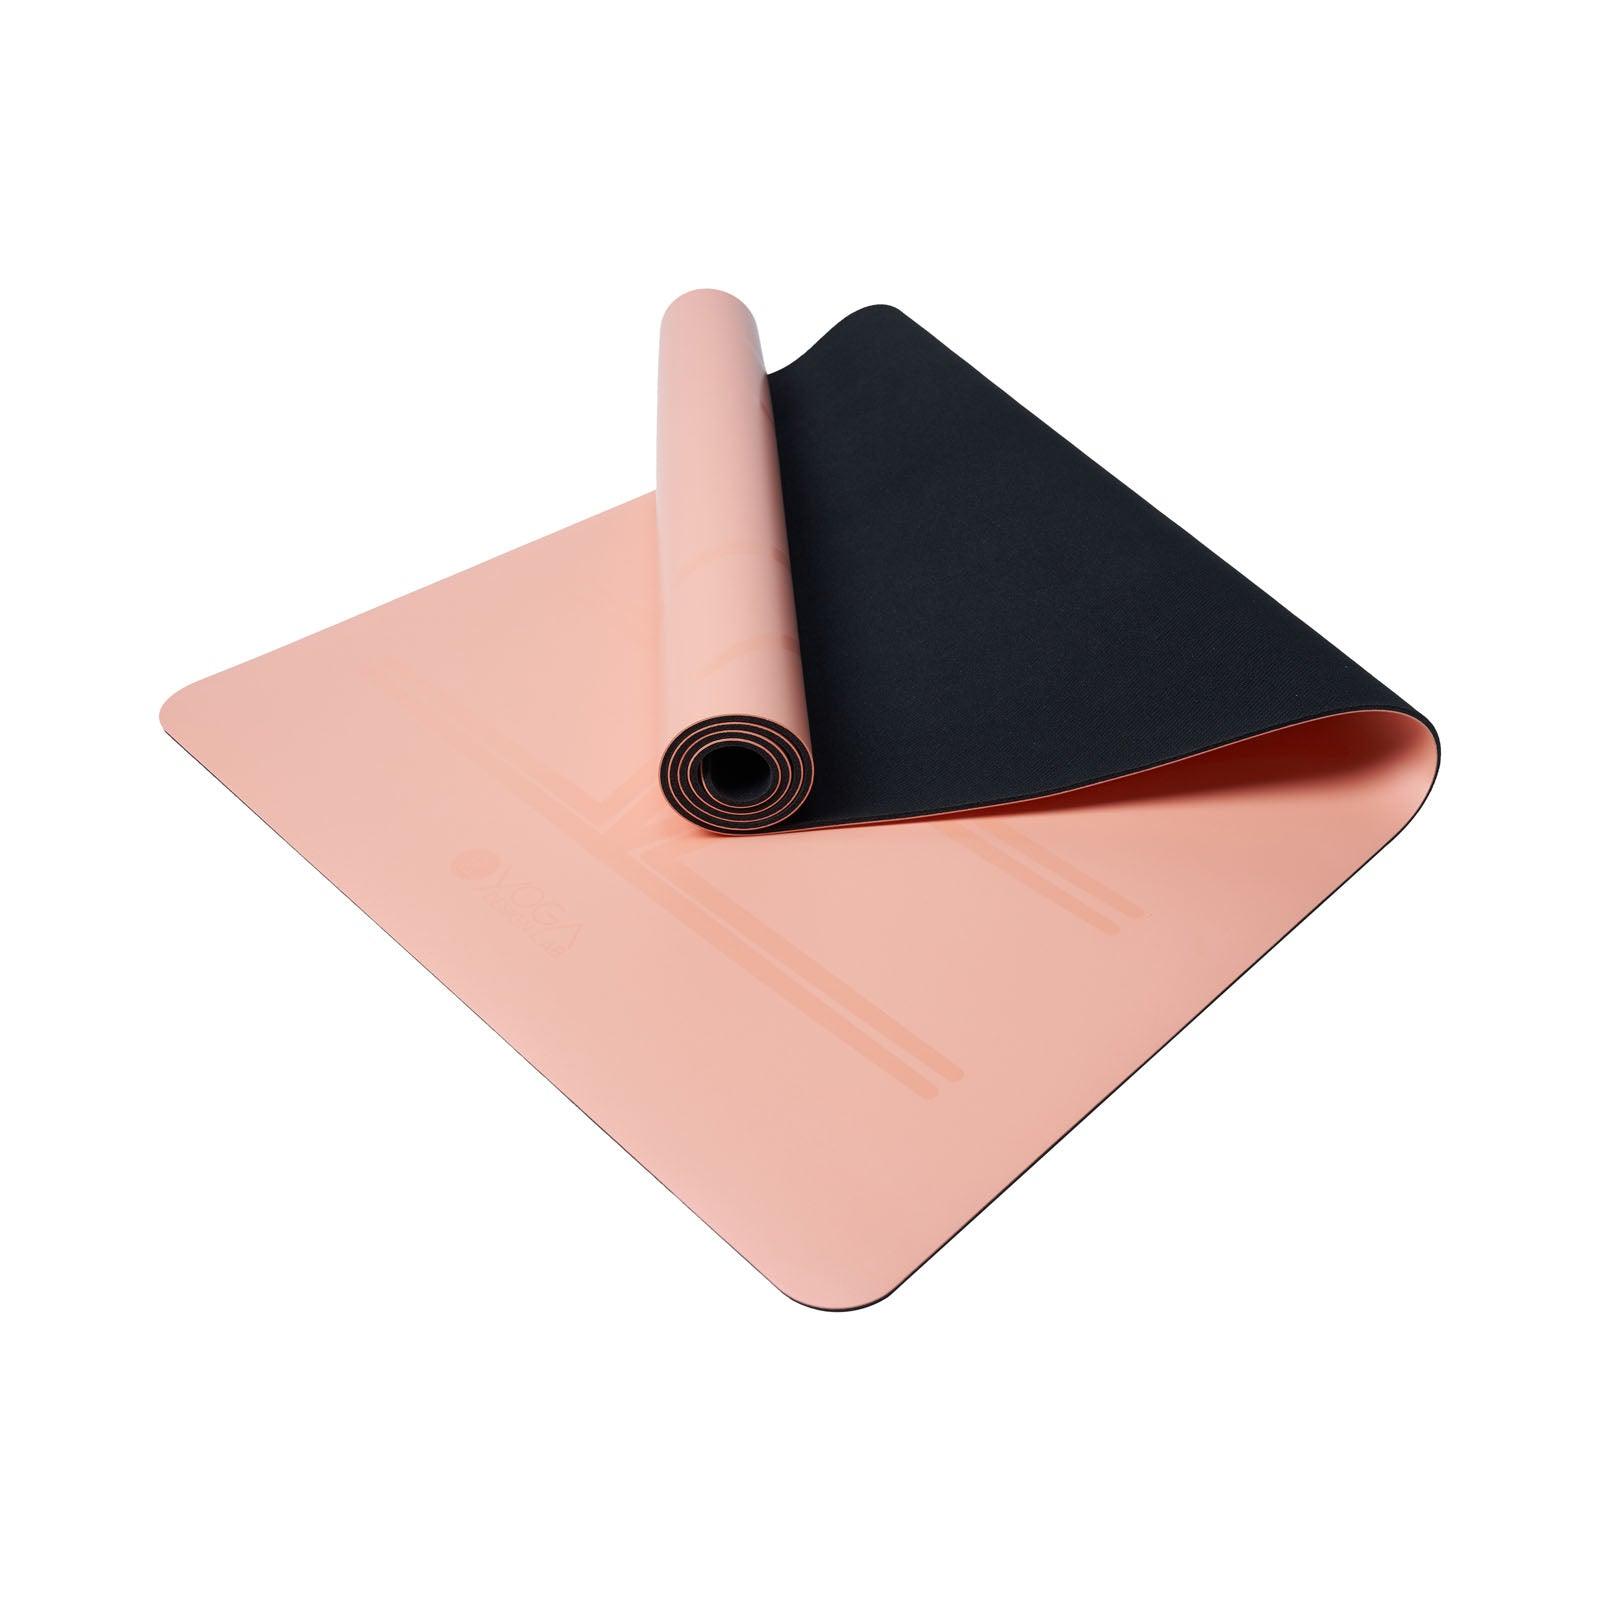 Infinity Yoga Mat - 5mm - Diamond Align Coral - Best Non - Slip Yoga Mat